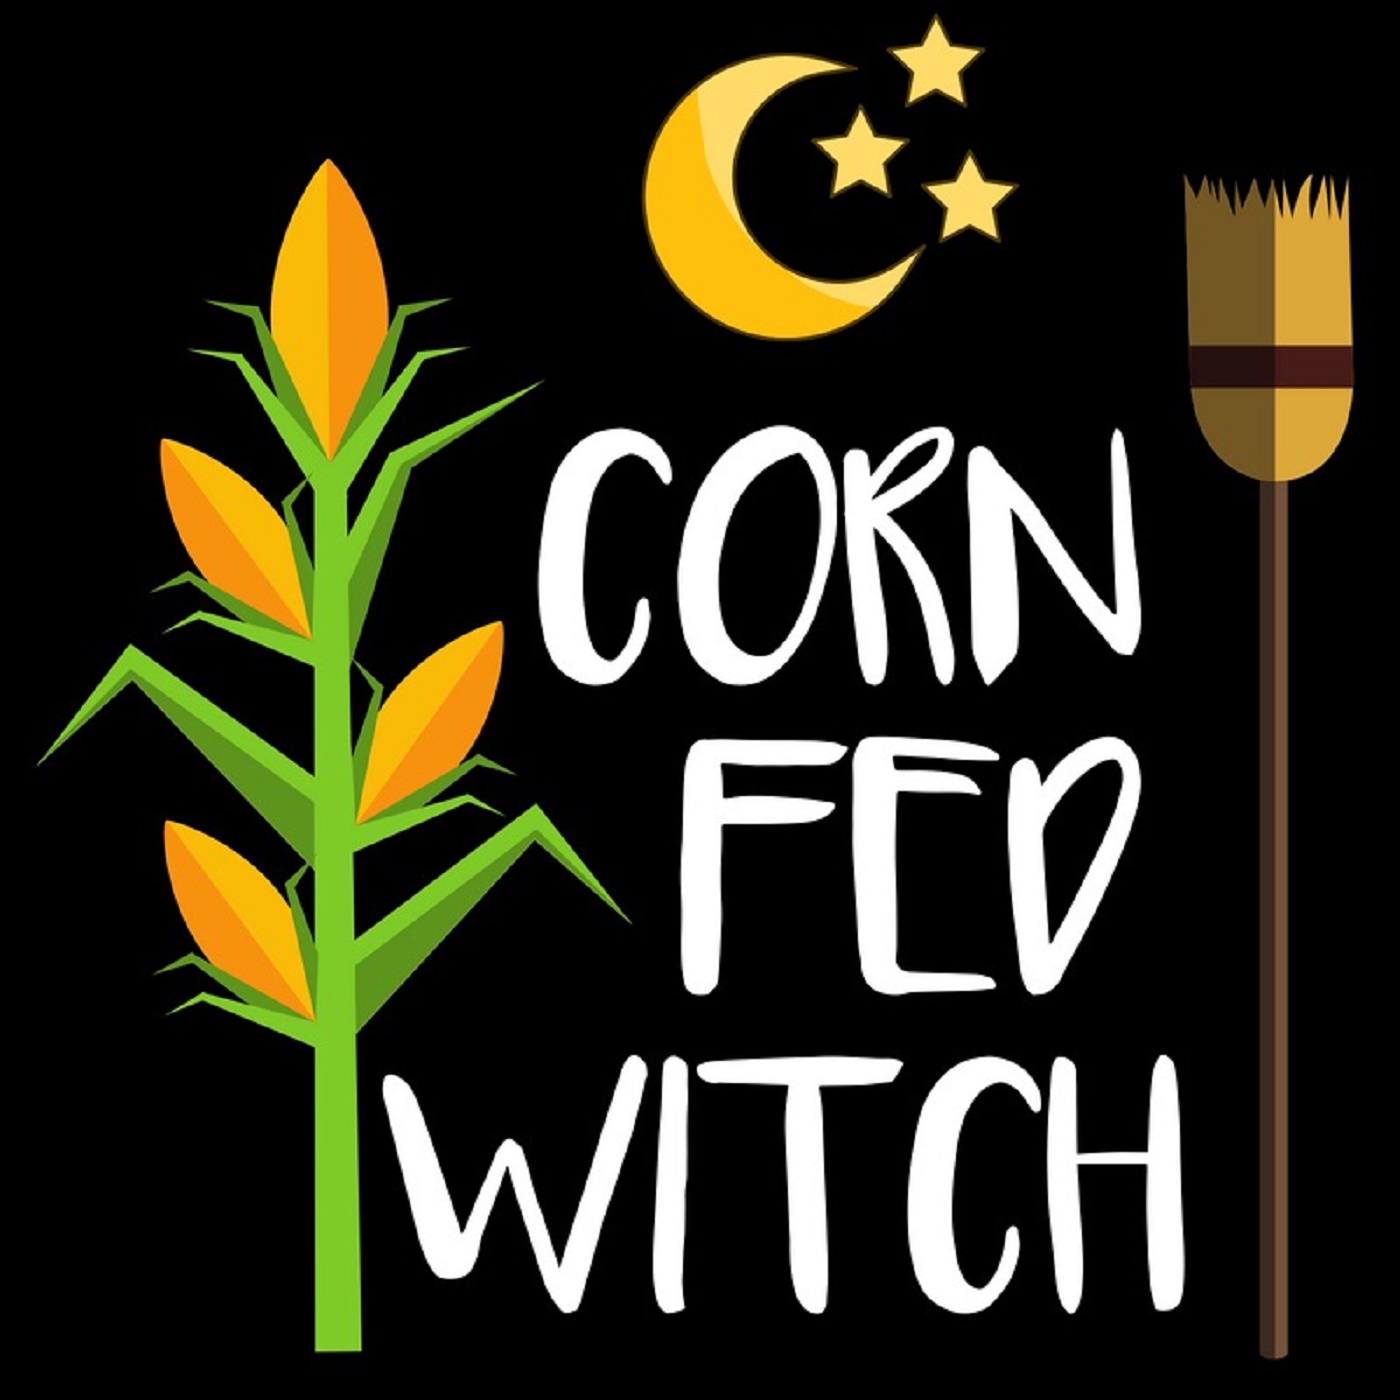 Corn Fed Witch